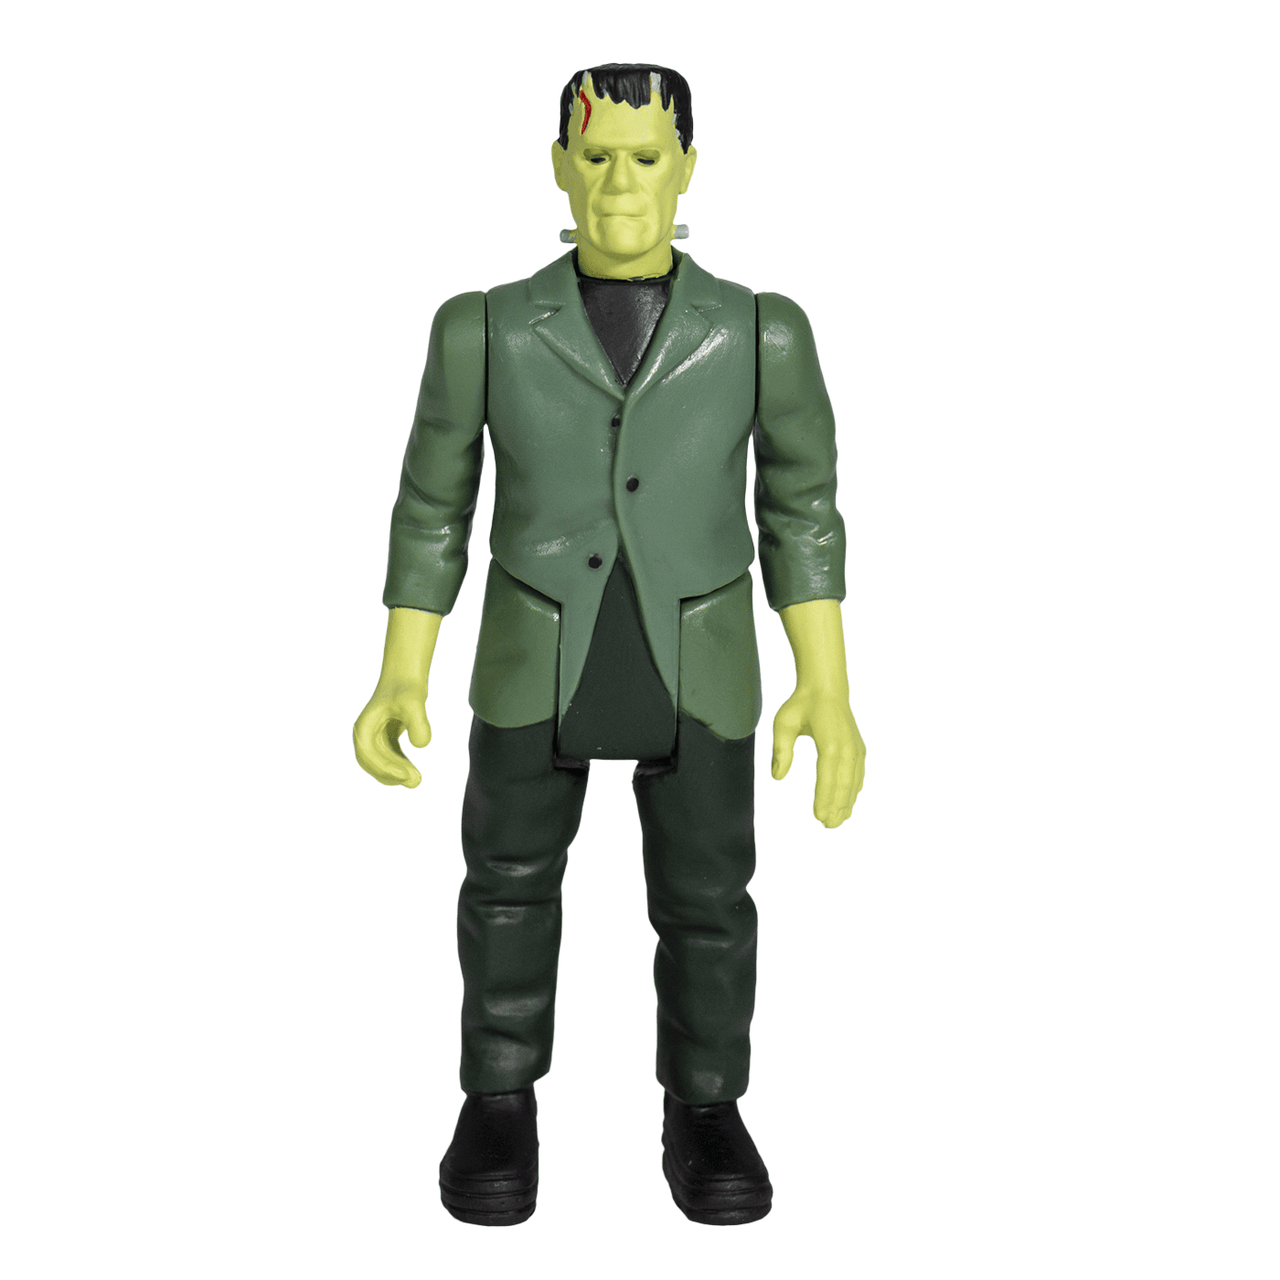 Frankenstein Monster Figurine